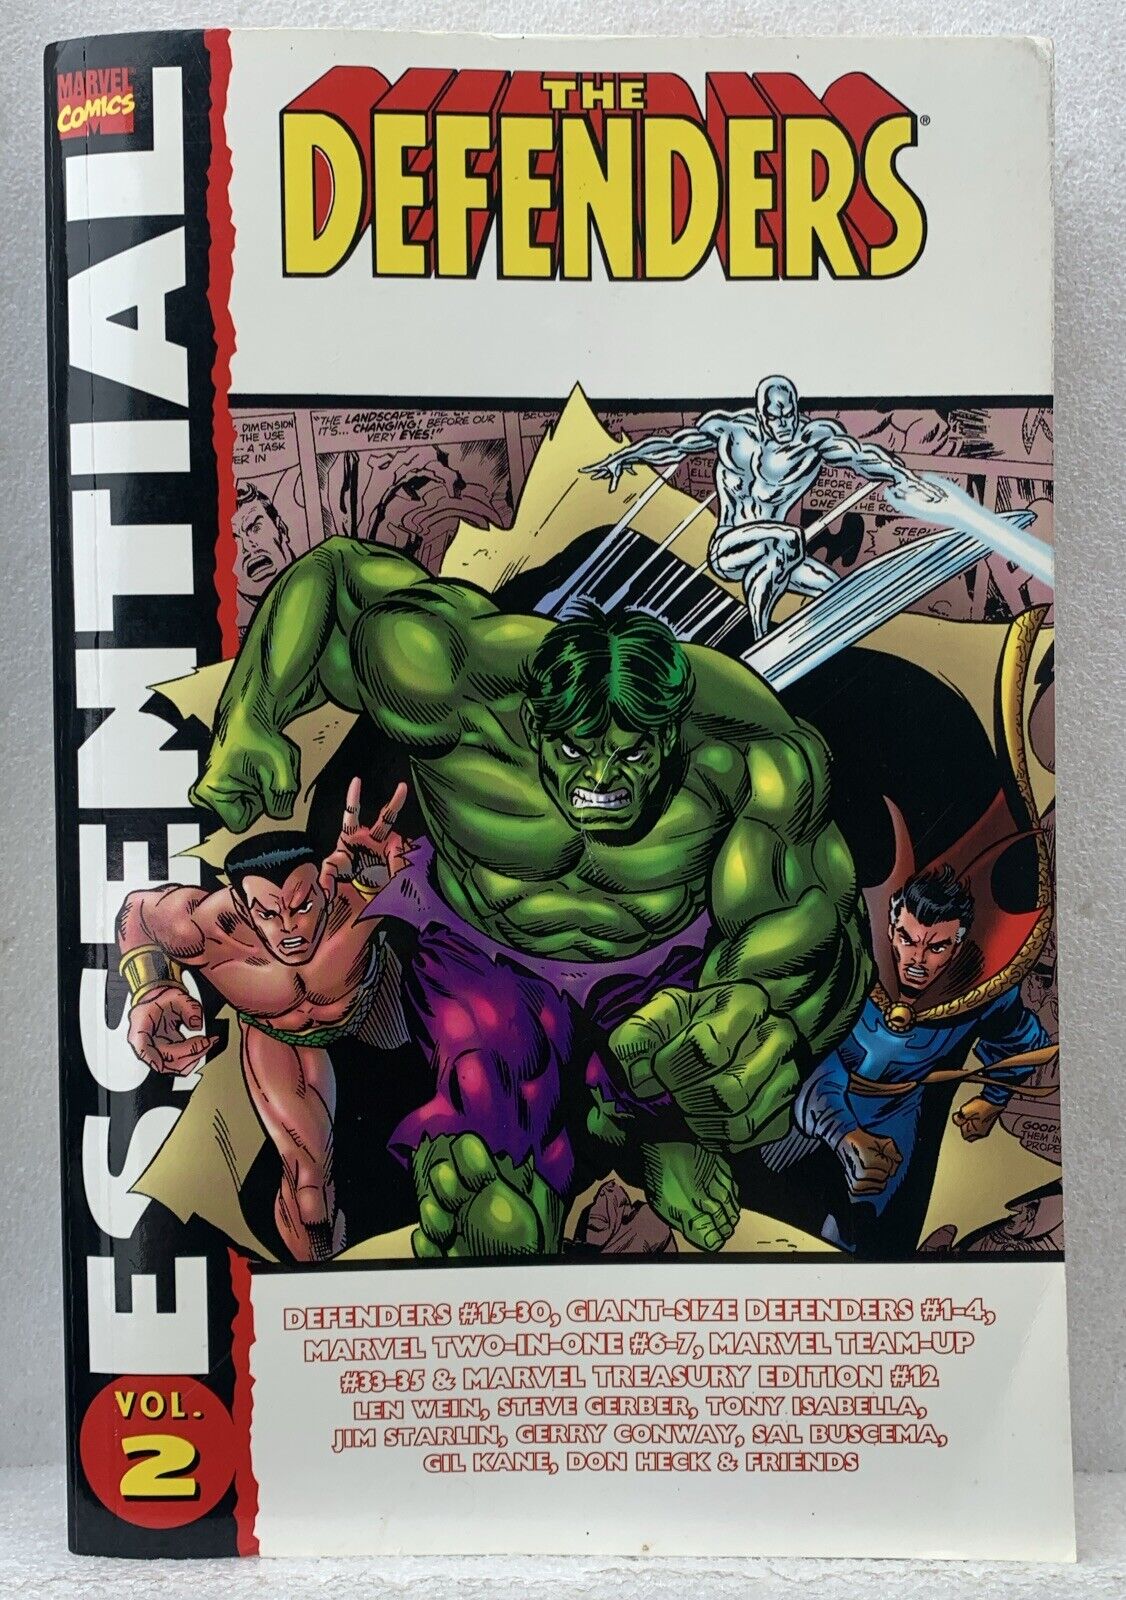 Marvel Comics: Essential Defenders Vol. 2 TPB by Len Wein & Steve Gerber